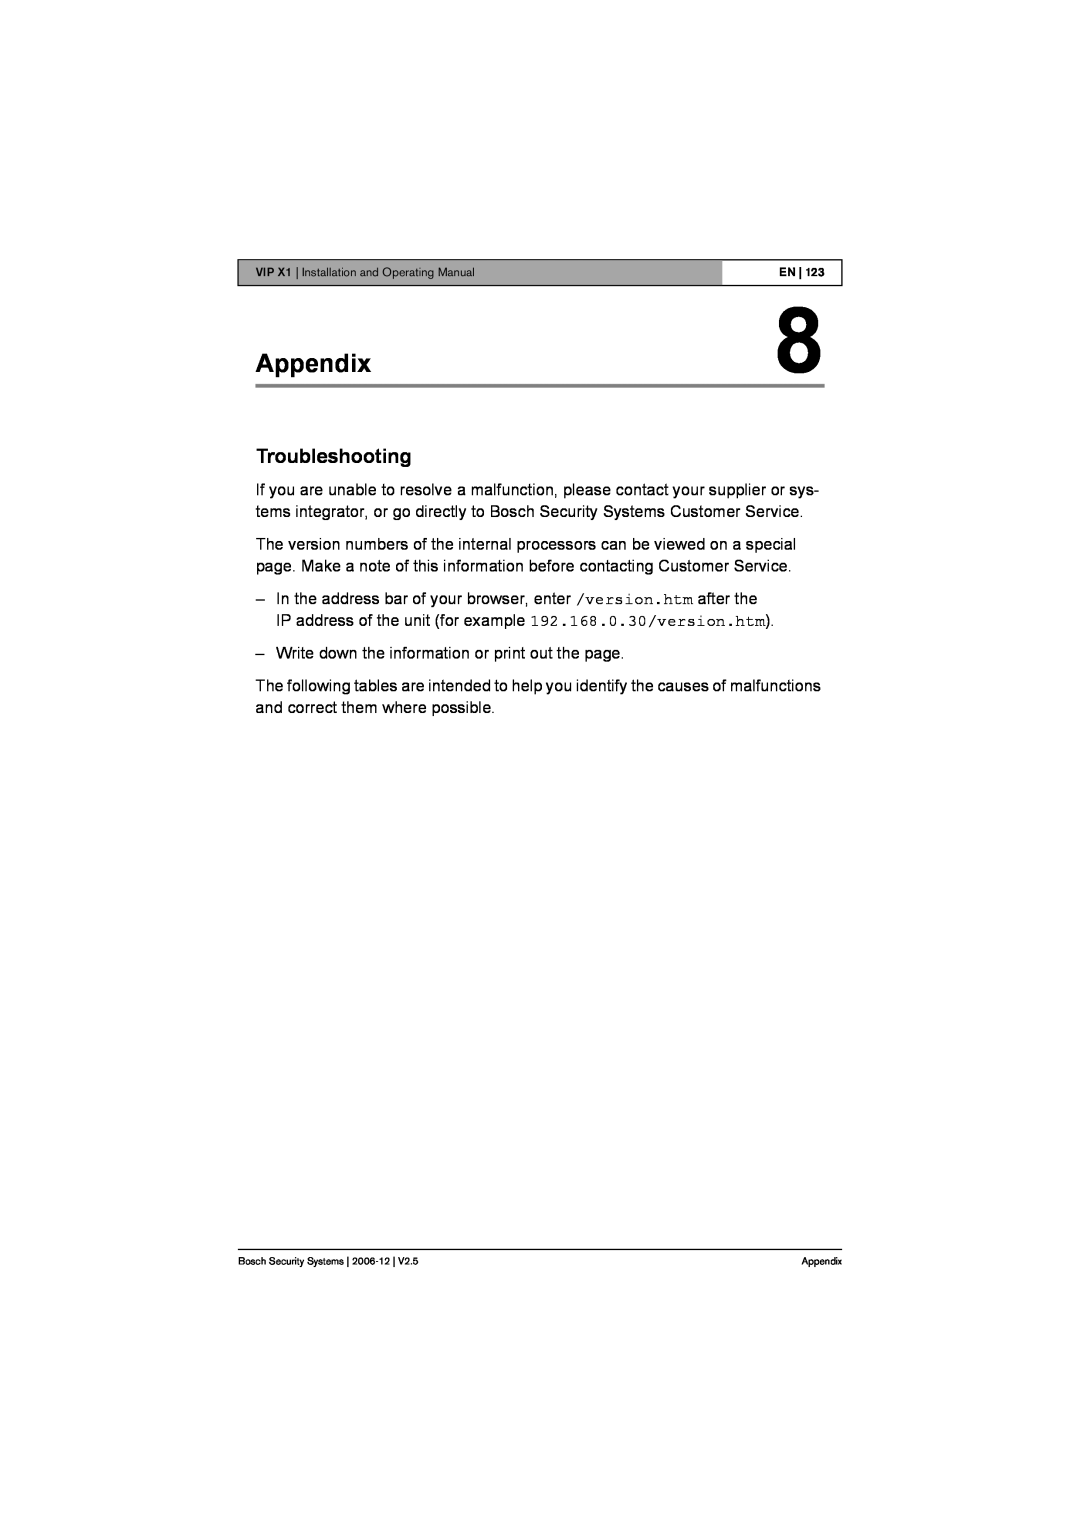 Bosch Appliances VIP X1 manual Appendix, Troubleshooting 